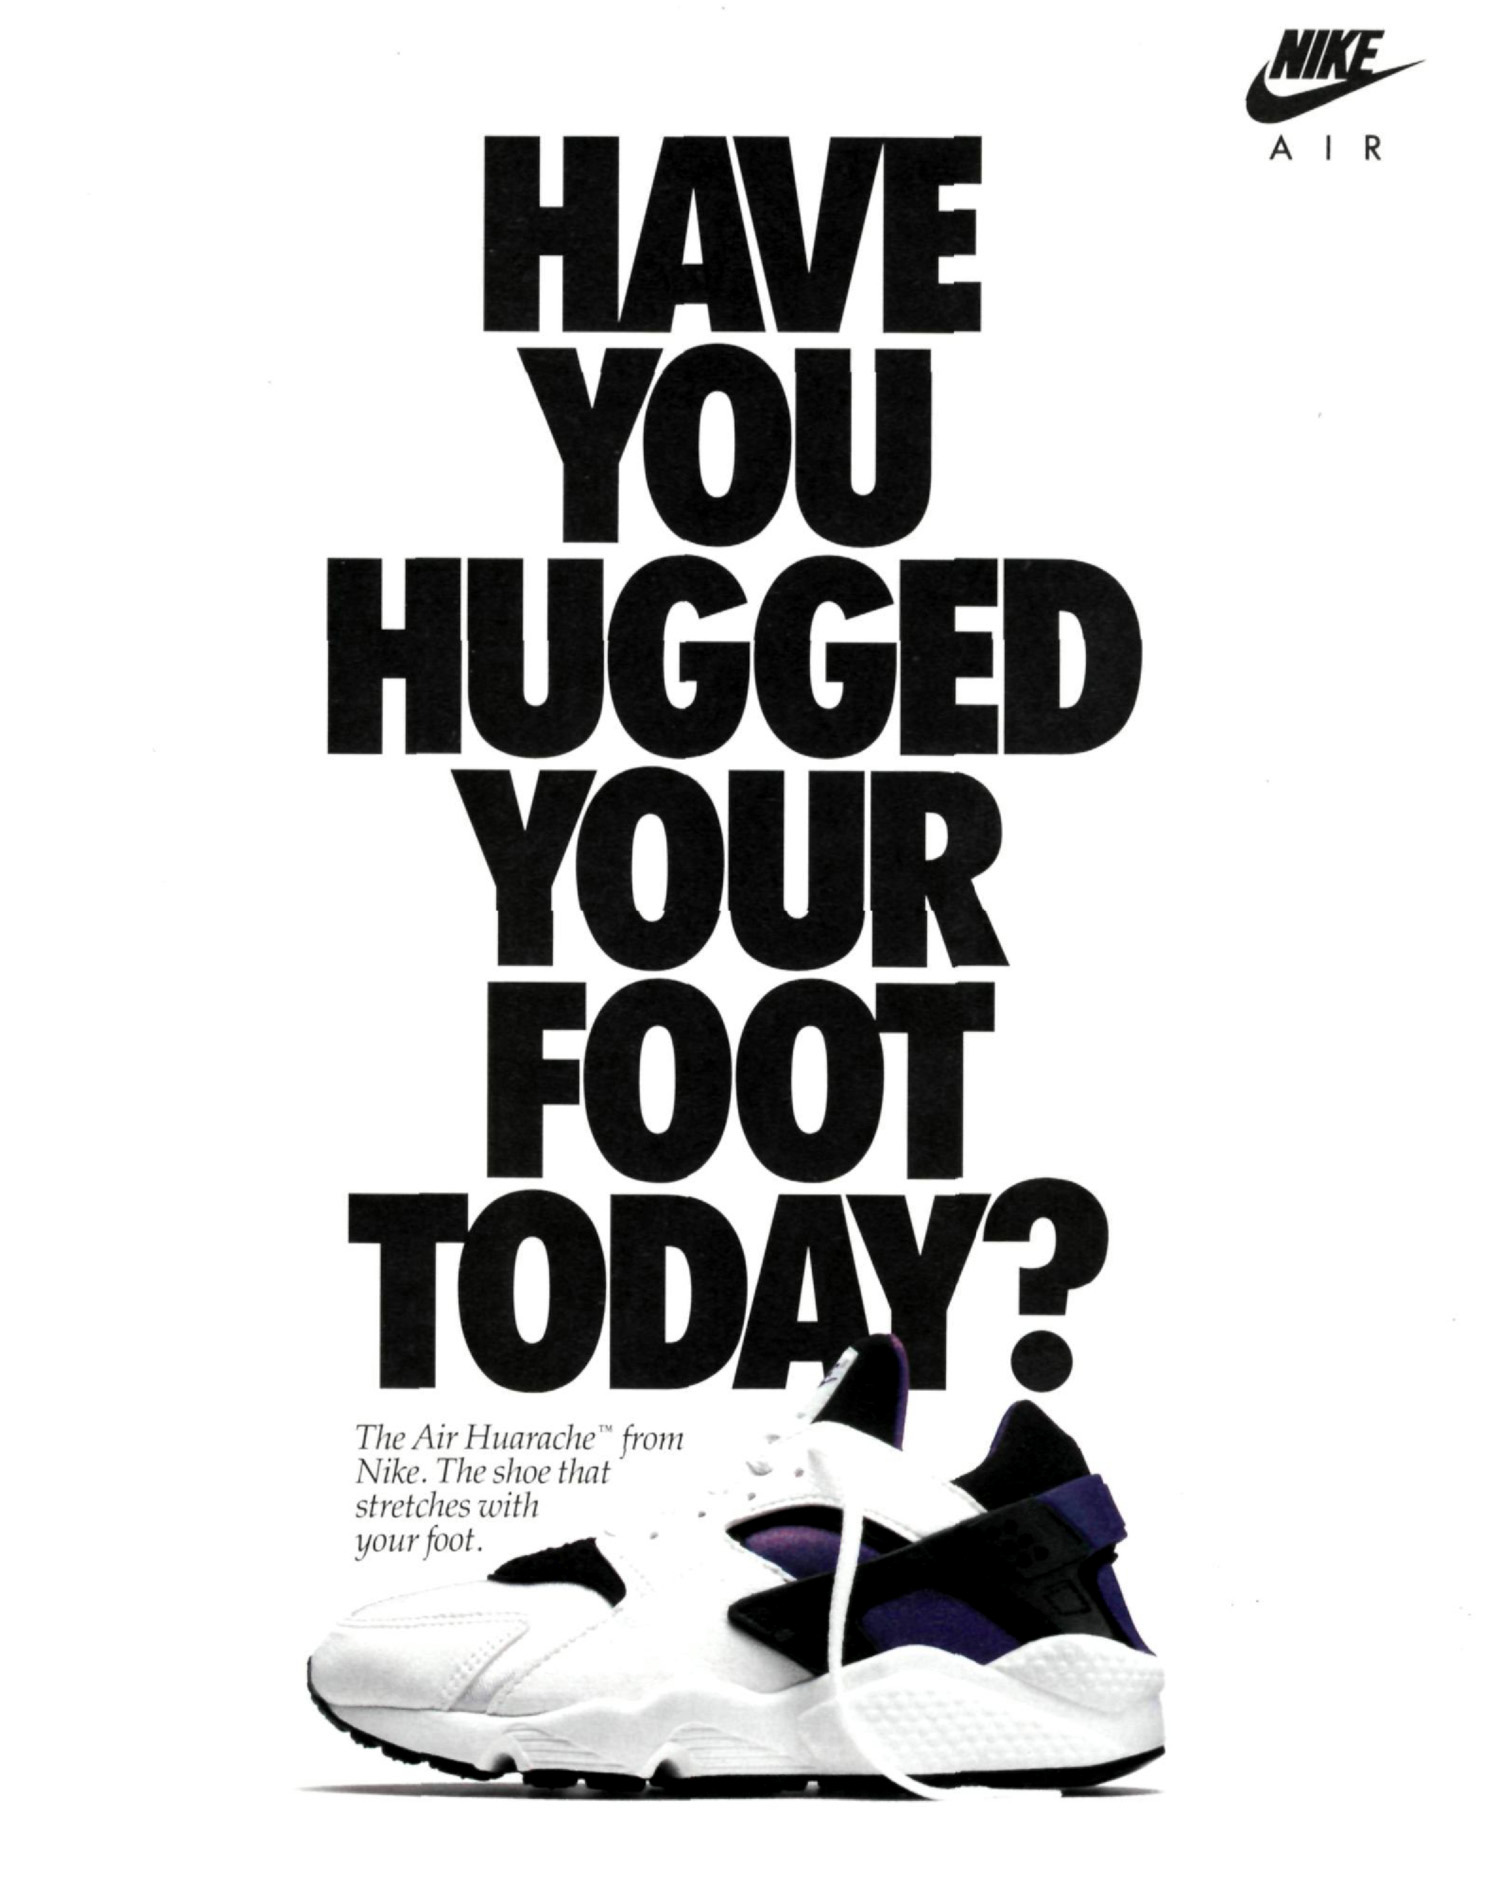 nike air huarache purple hugged your foot today ad 1991.jpg